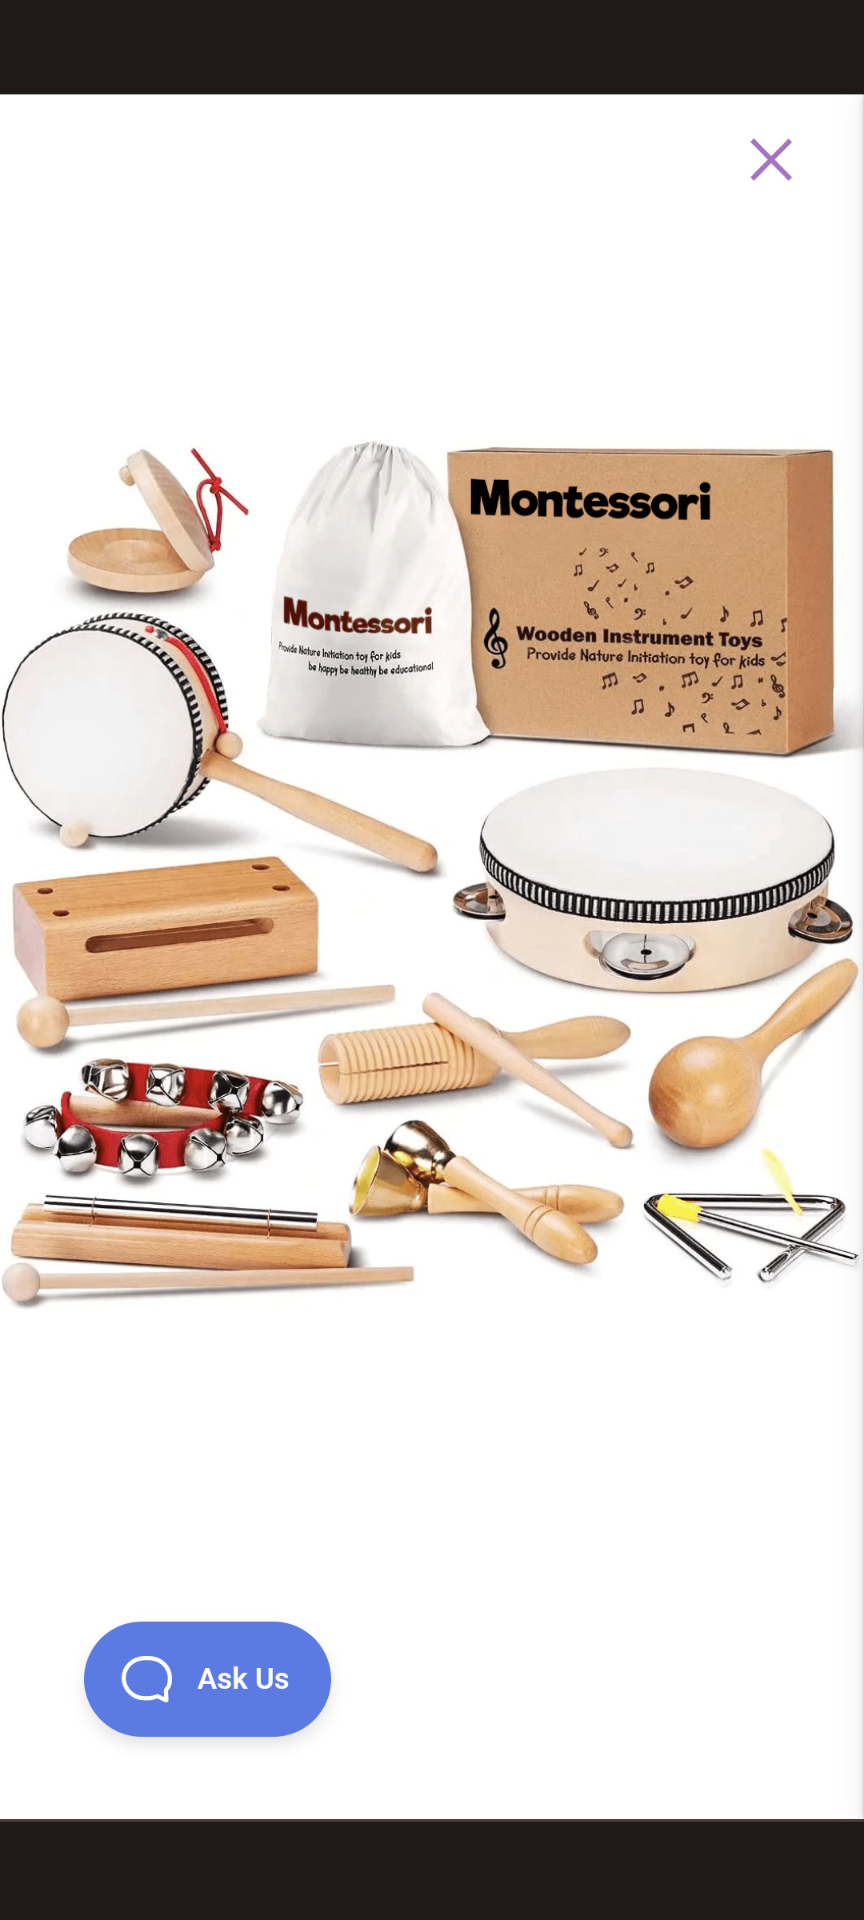 Wooden instruments